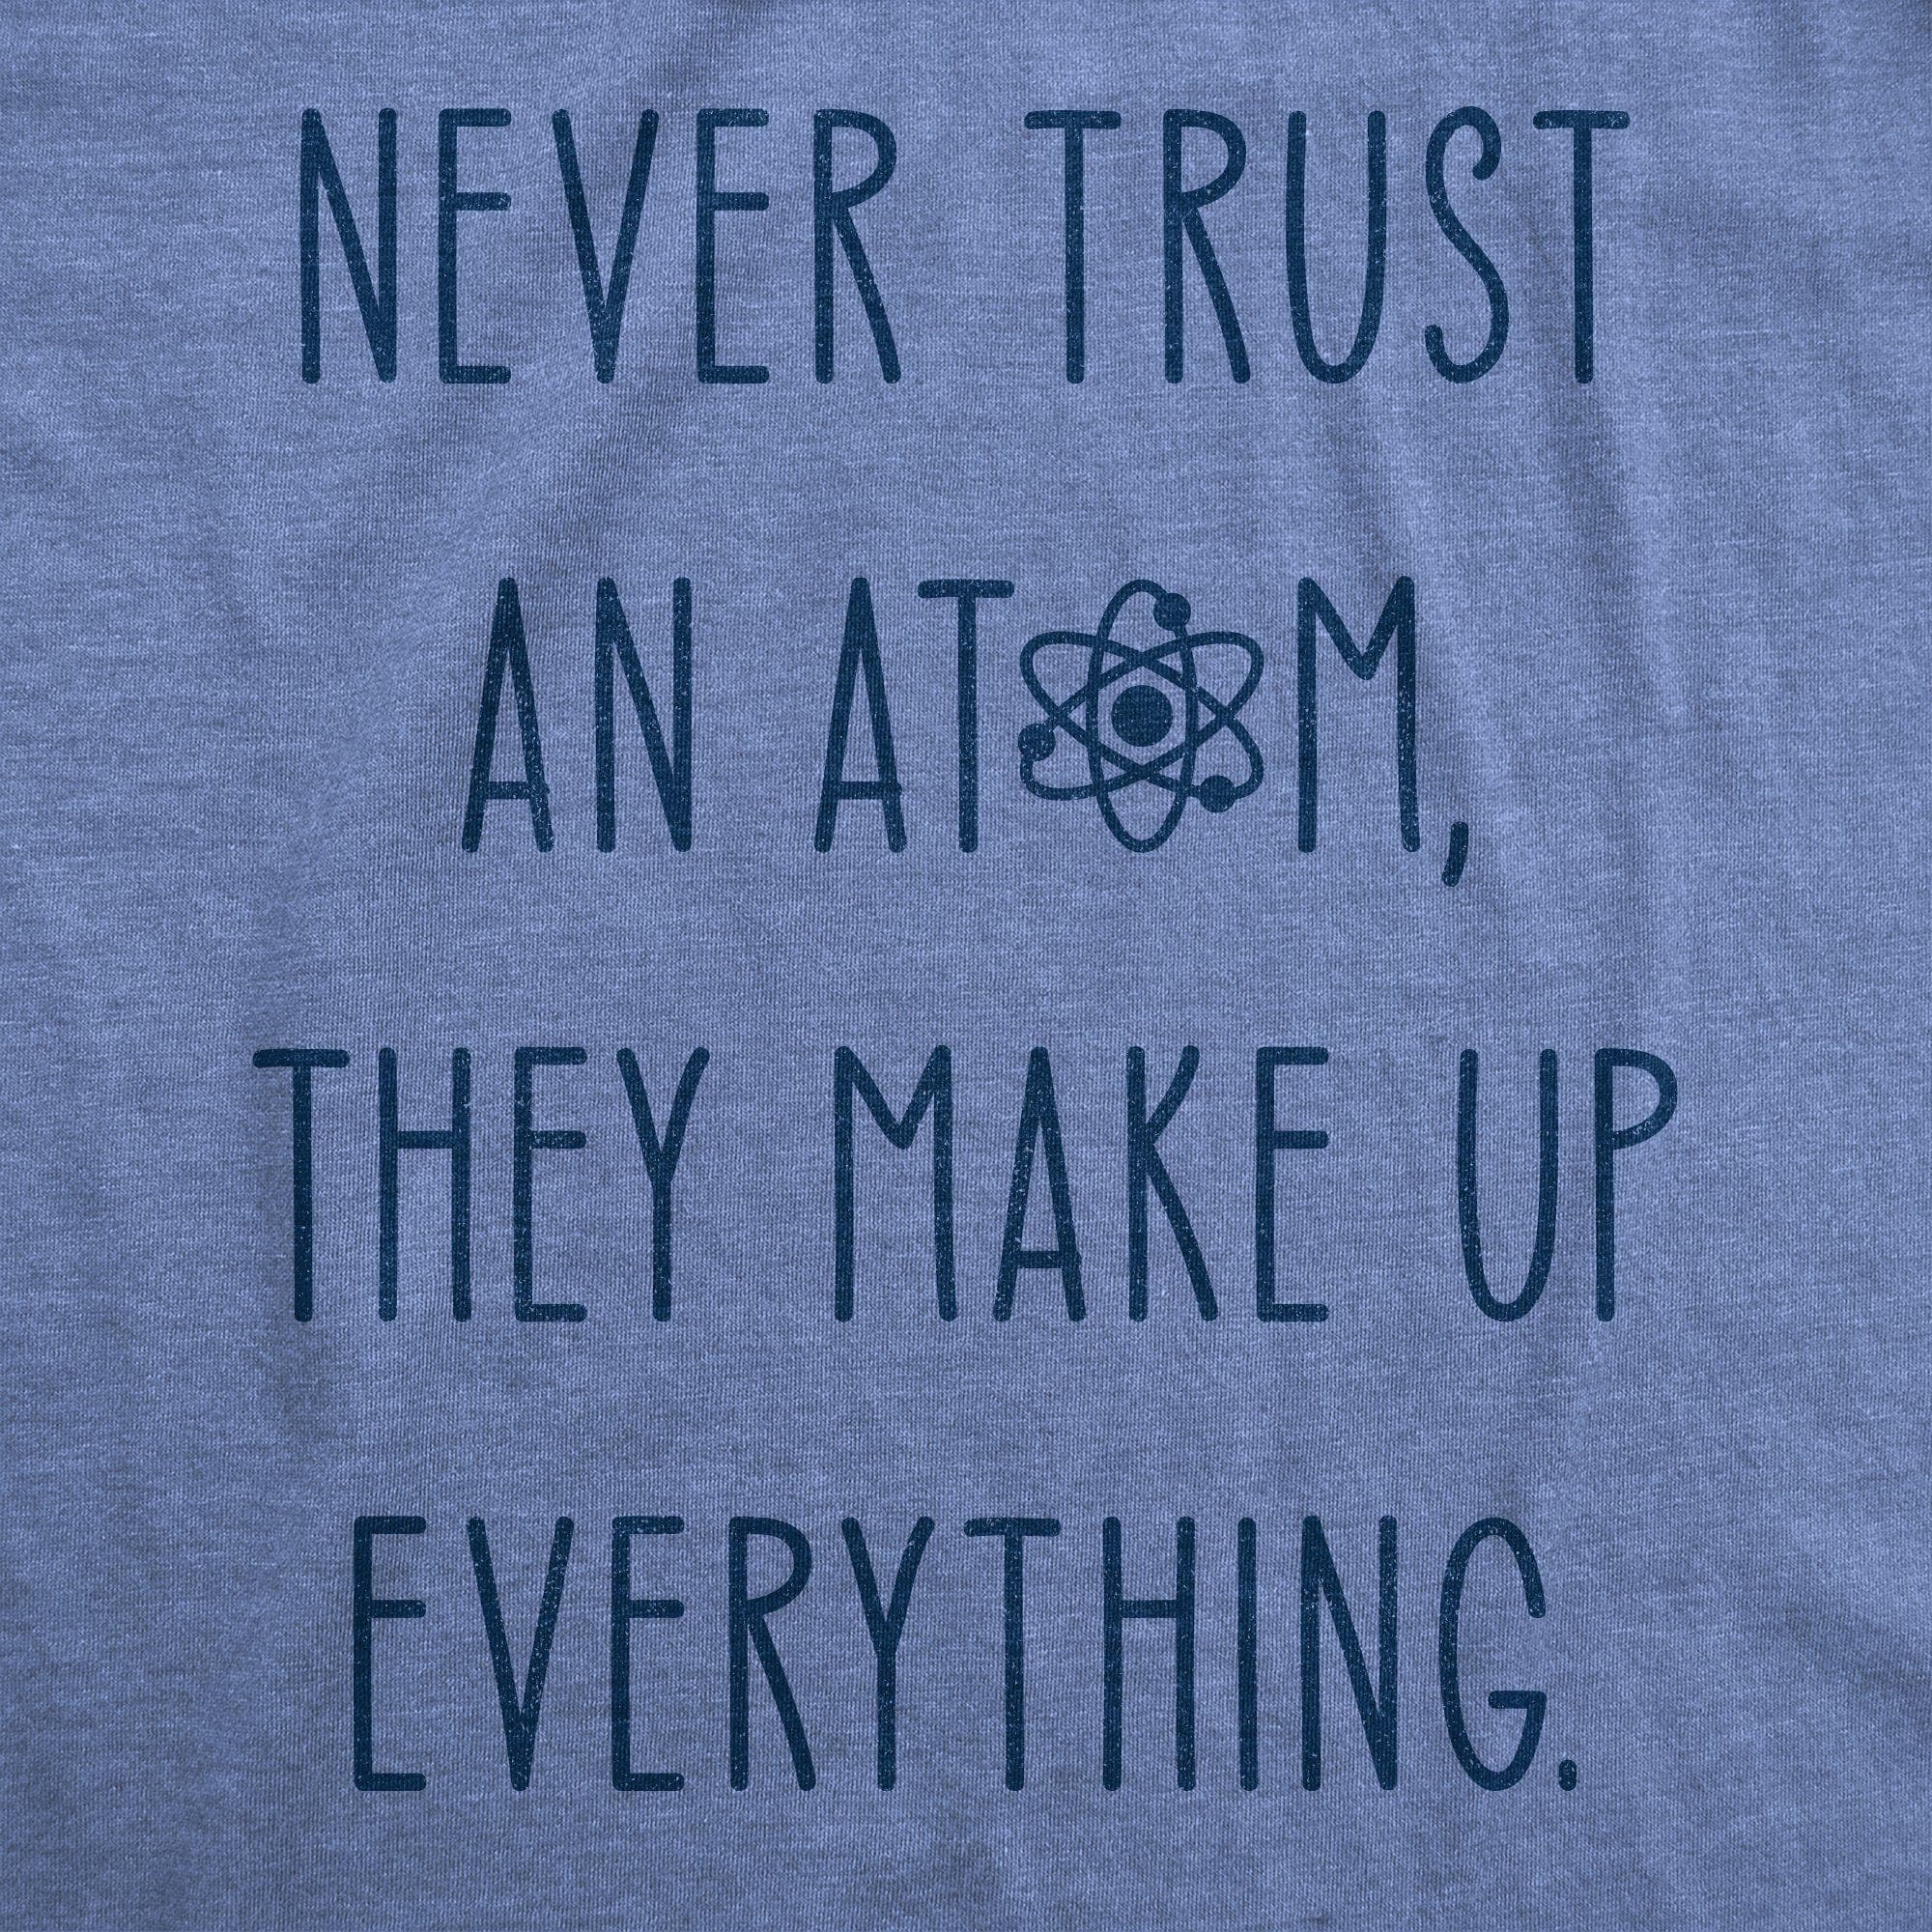 Never Trust An Atom Women's Tshirt - Crazy Dog T-Shirts